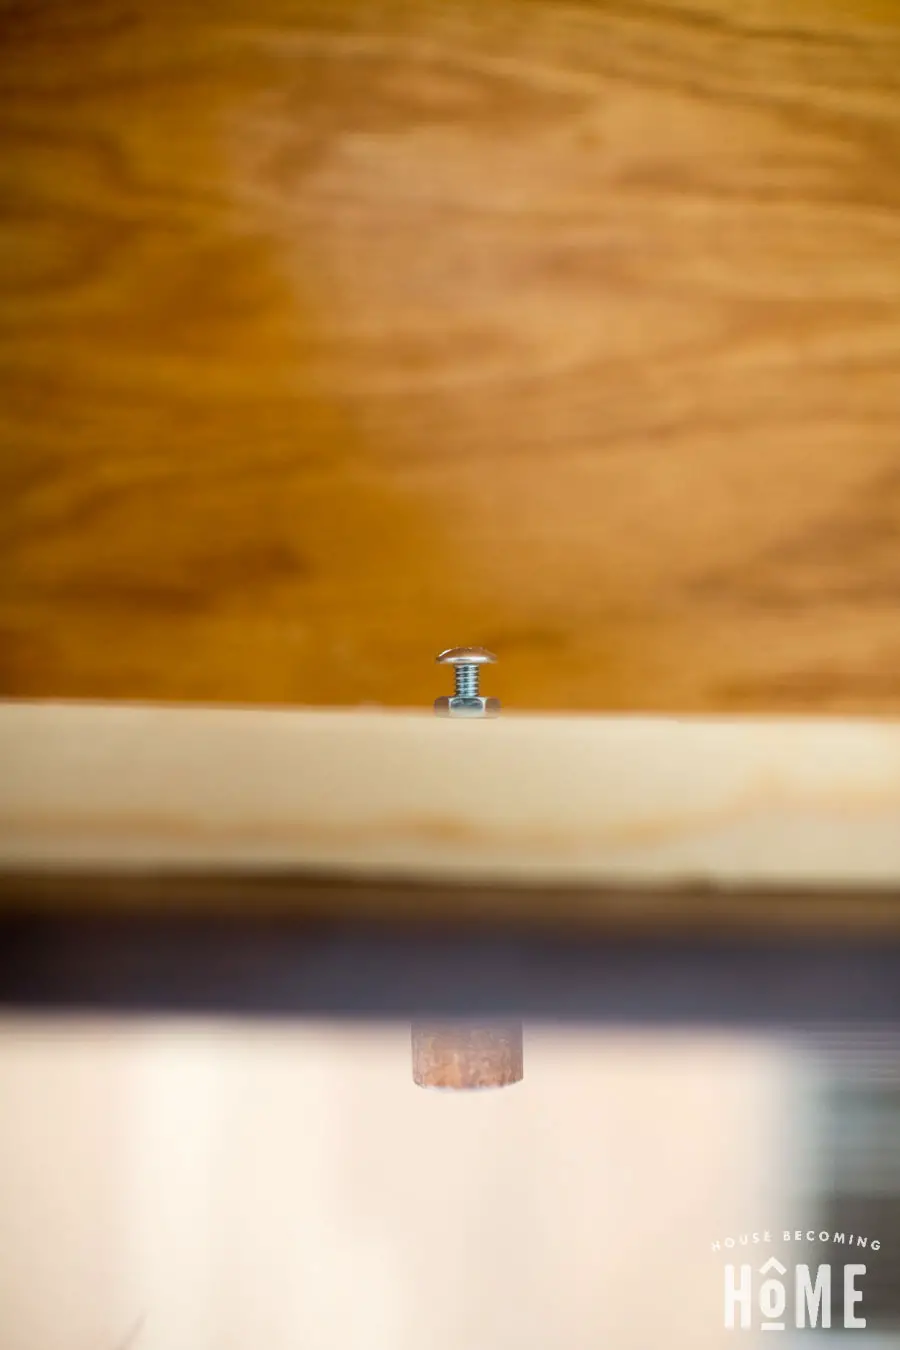 DIY drawer knob screwed into drawer top view